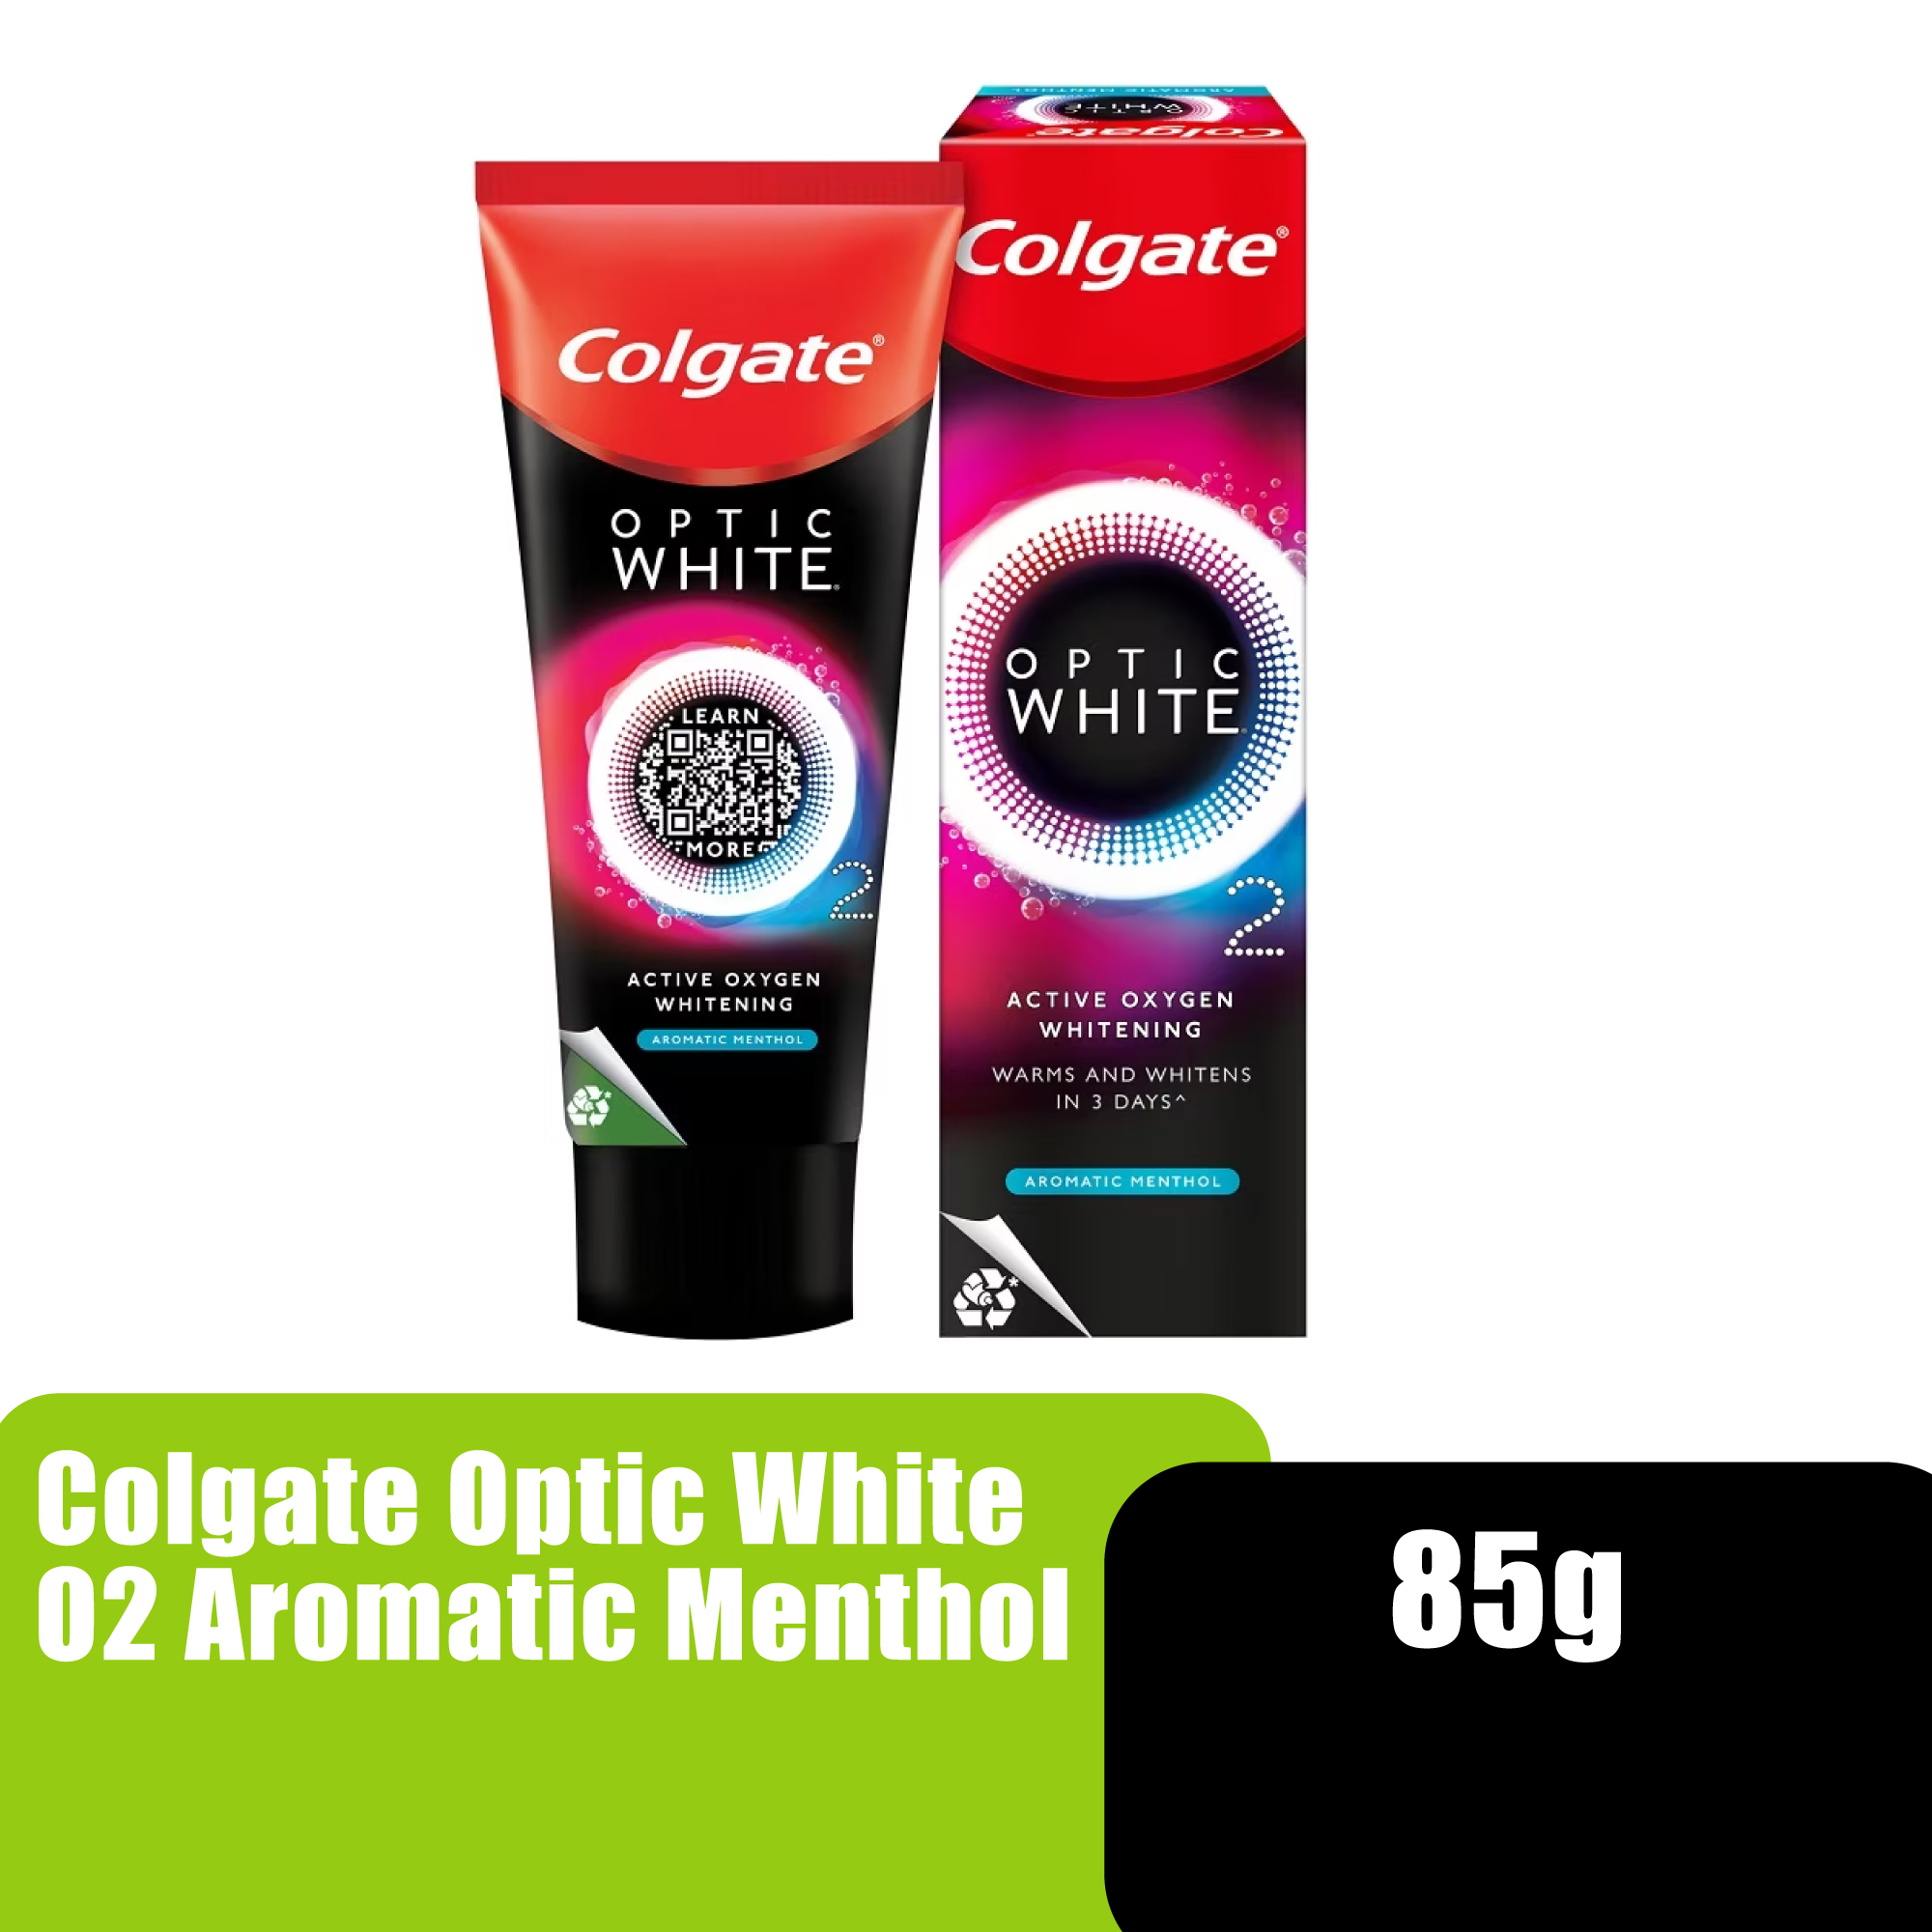 COLGATE OPTIC WHITE O2 AROMATIC MENTHOL TOOTHPASTE 85G